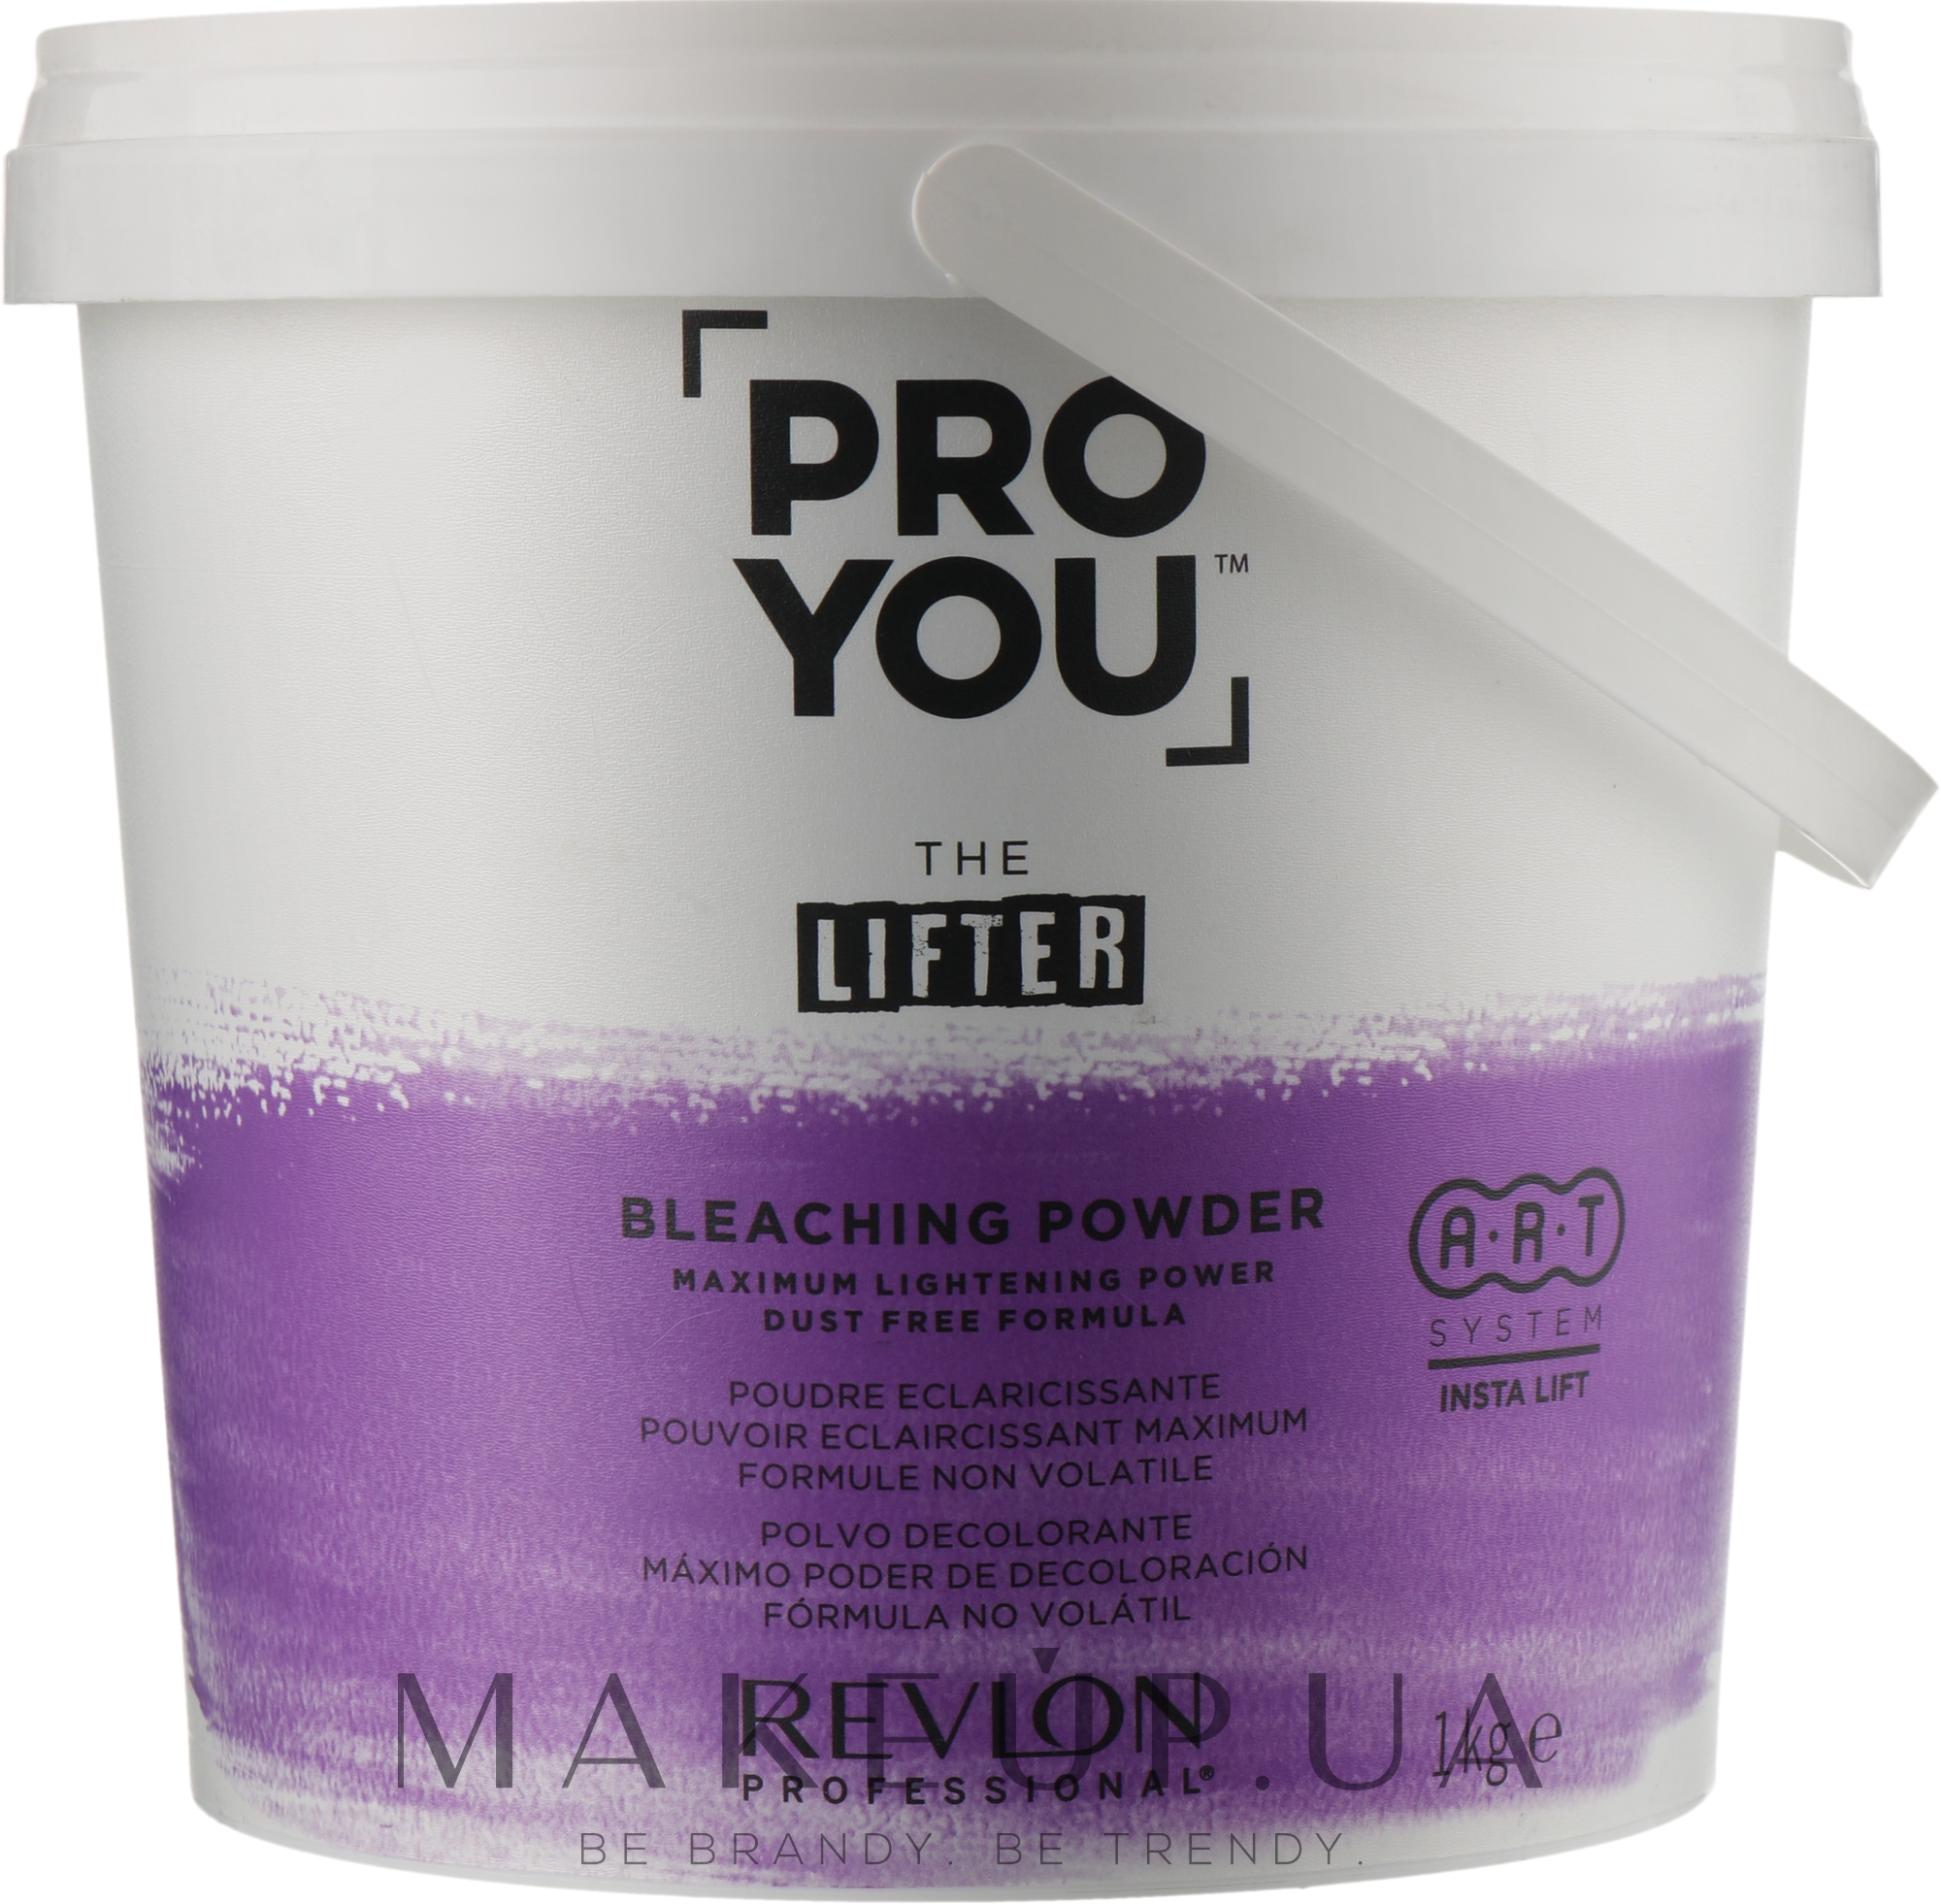 Осветляющая пудра для волос - Revlon Professional Pro You The Lifter Bleaching Powder — фото 1000g